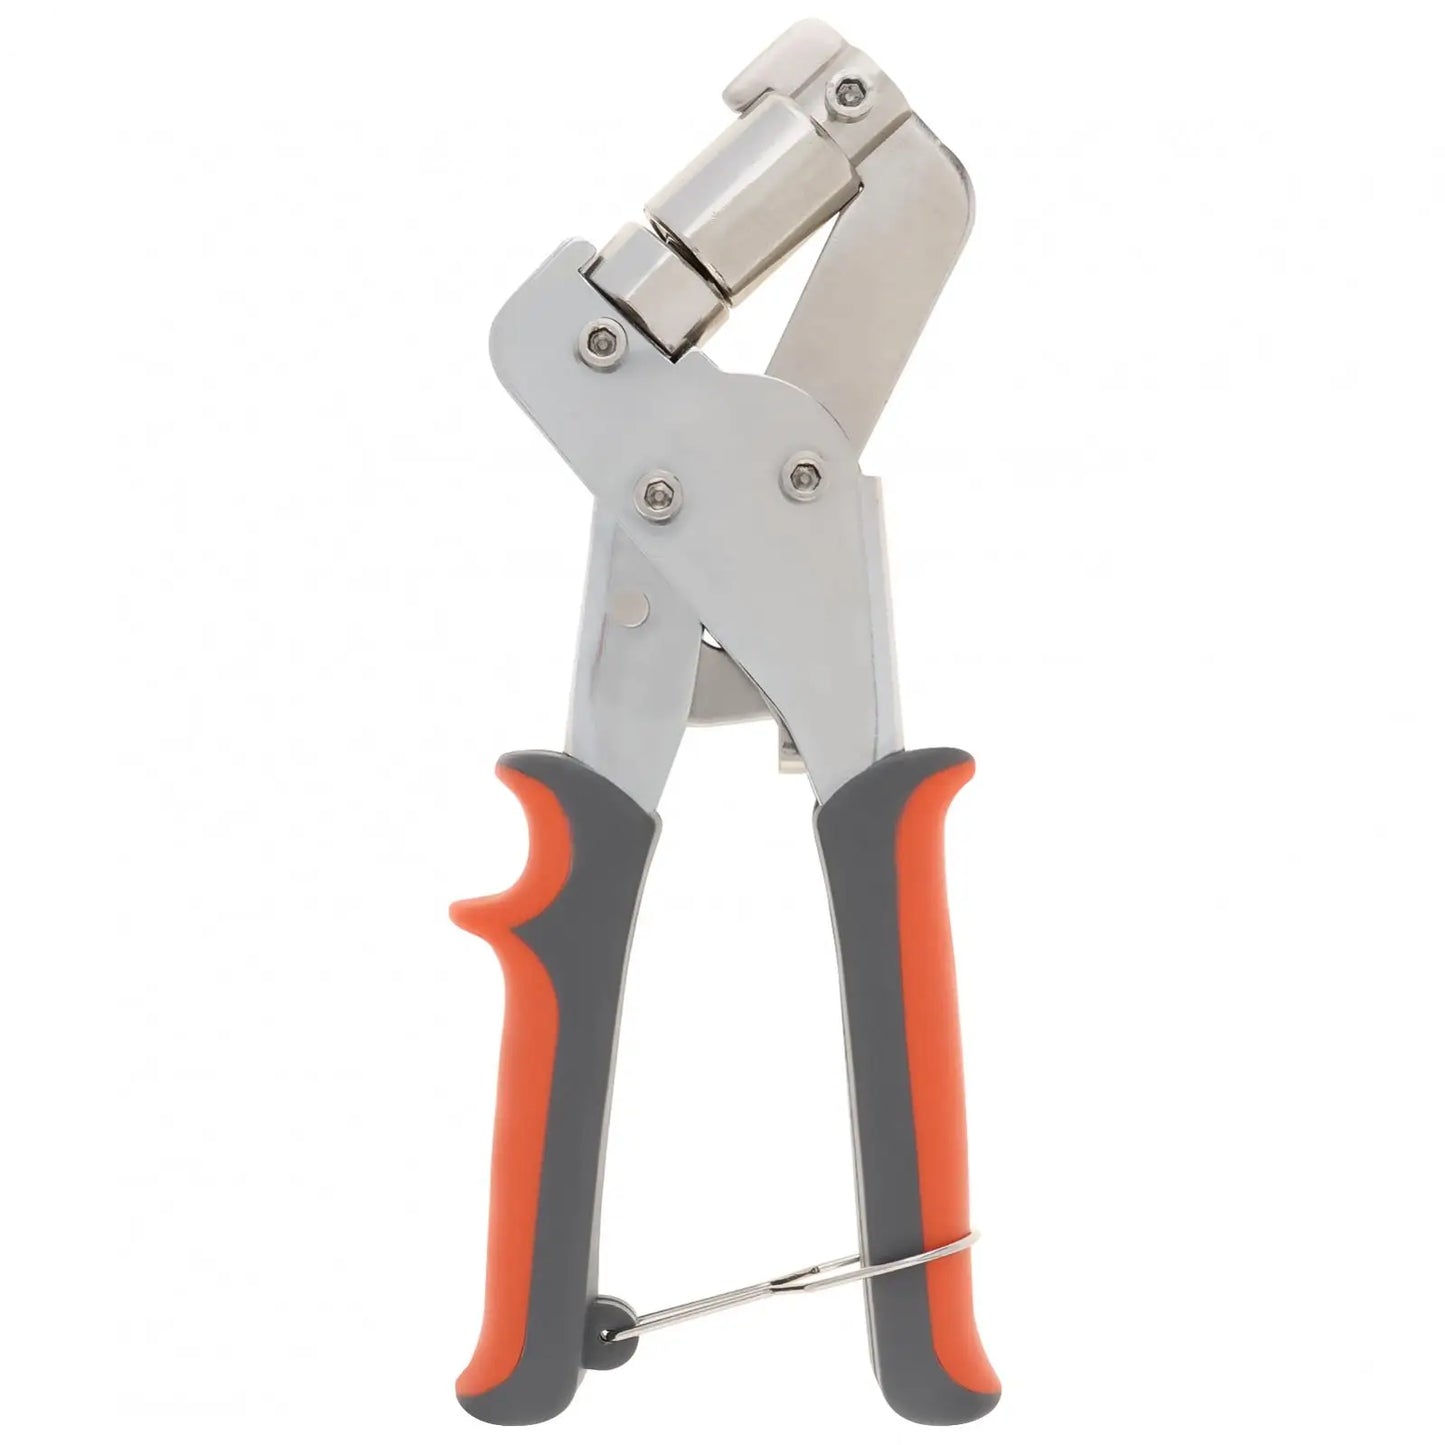 Grommet Tool Kit 3/8 inch Handheld Hole Punch Plier